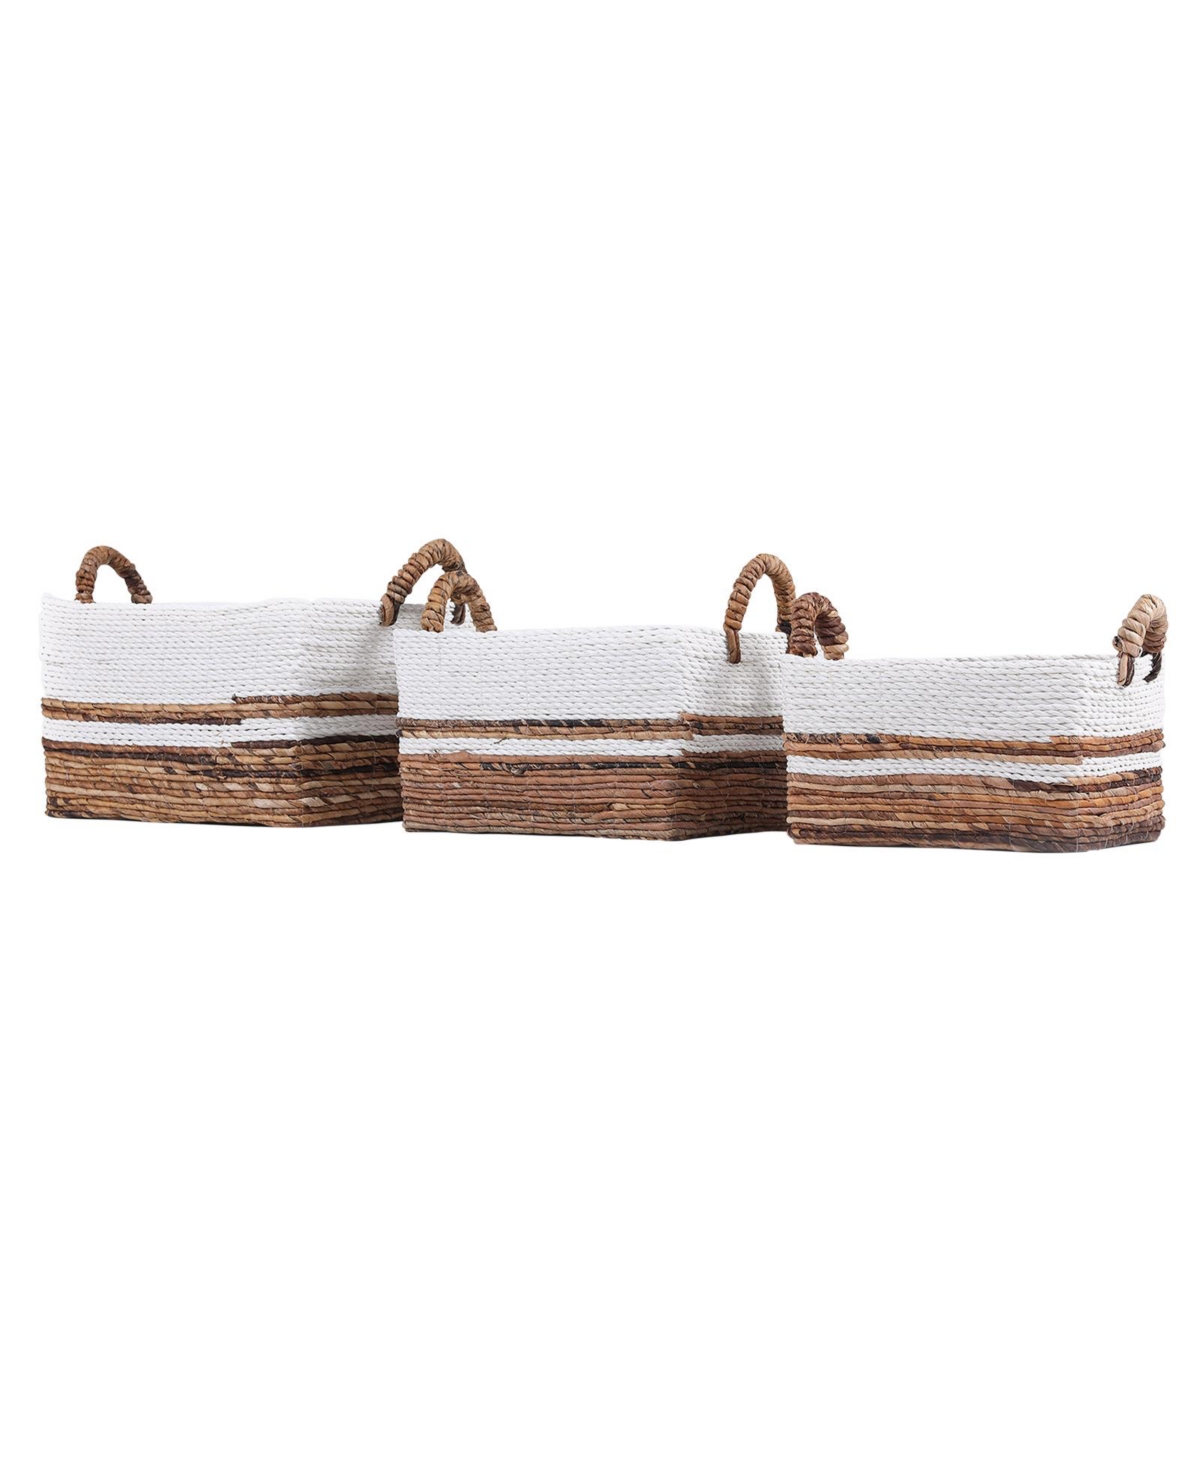 3 Piece Rectangular Dark Banana and Raffia Rope Storage Basket Set with Ear Handles - Natural and White